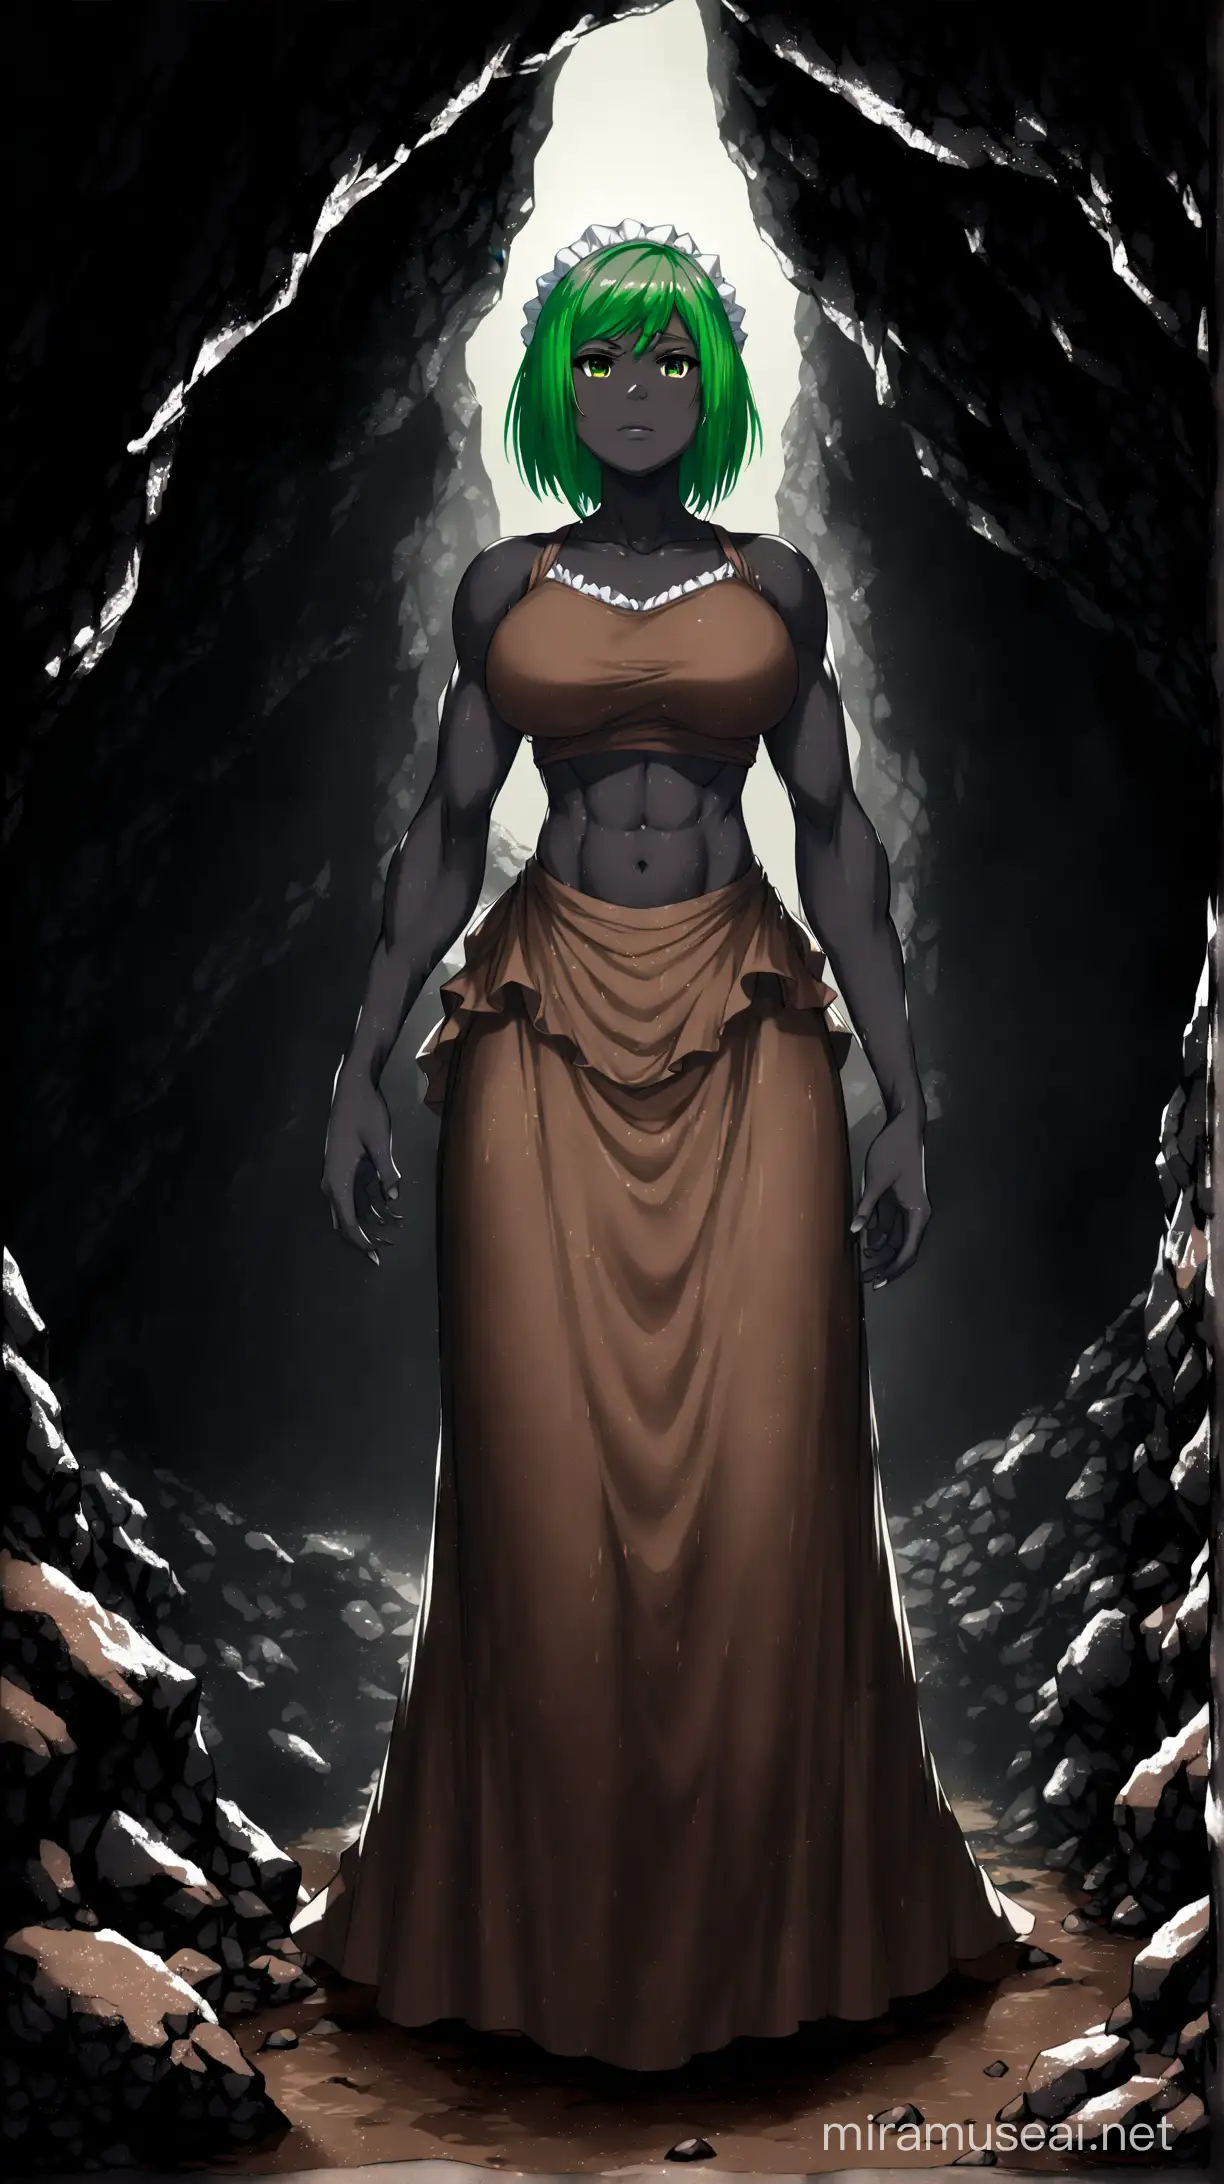 Muscular Golem Maid with Green Hair in a Dark Cavern Setting